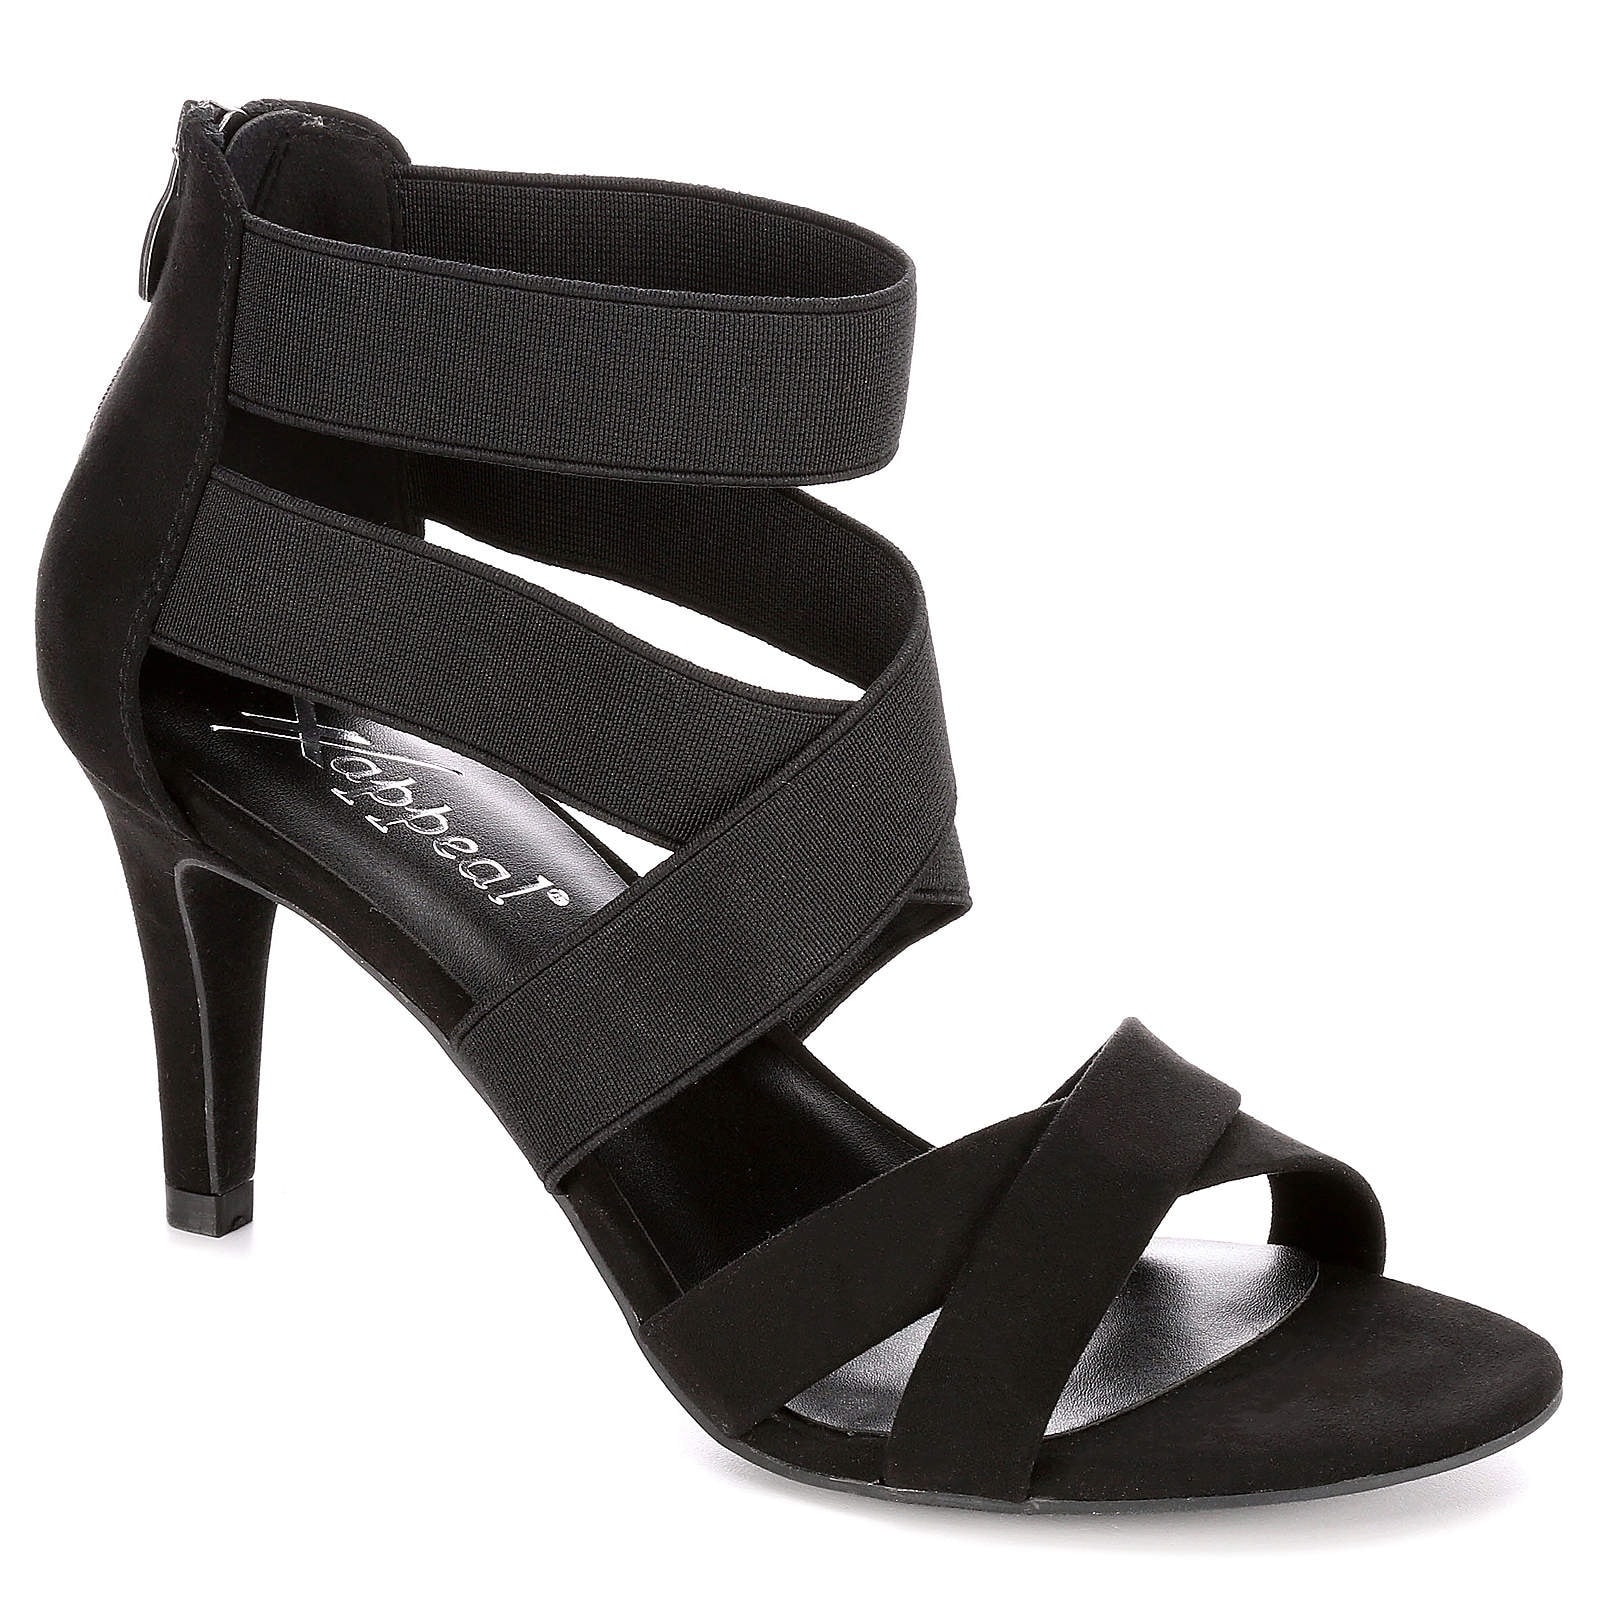 womens black high heels